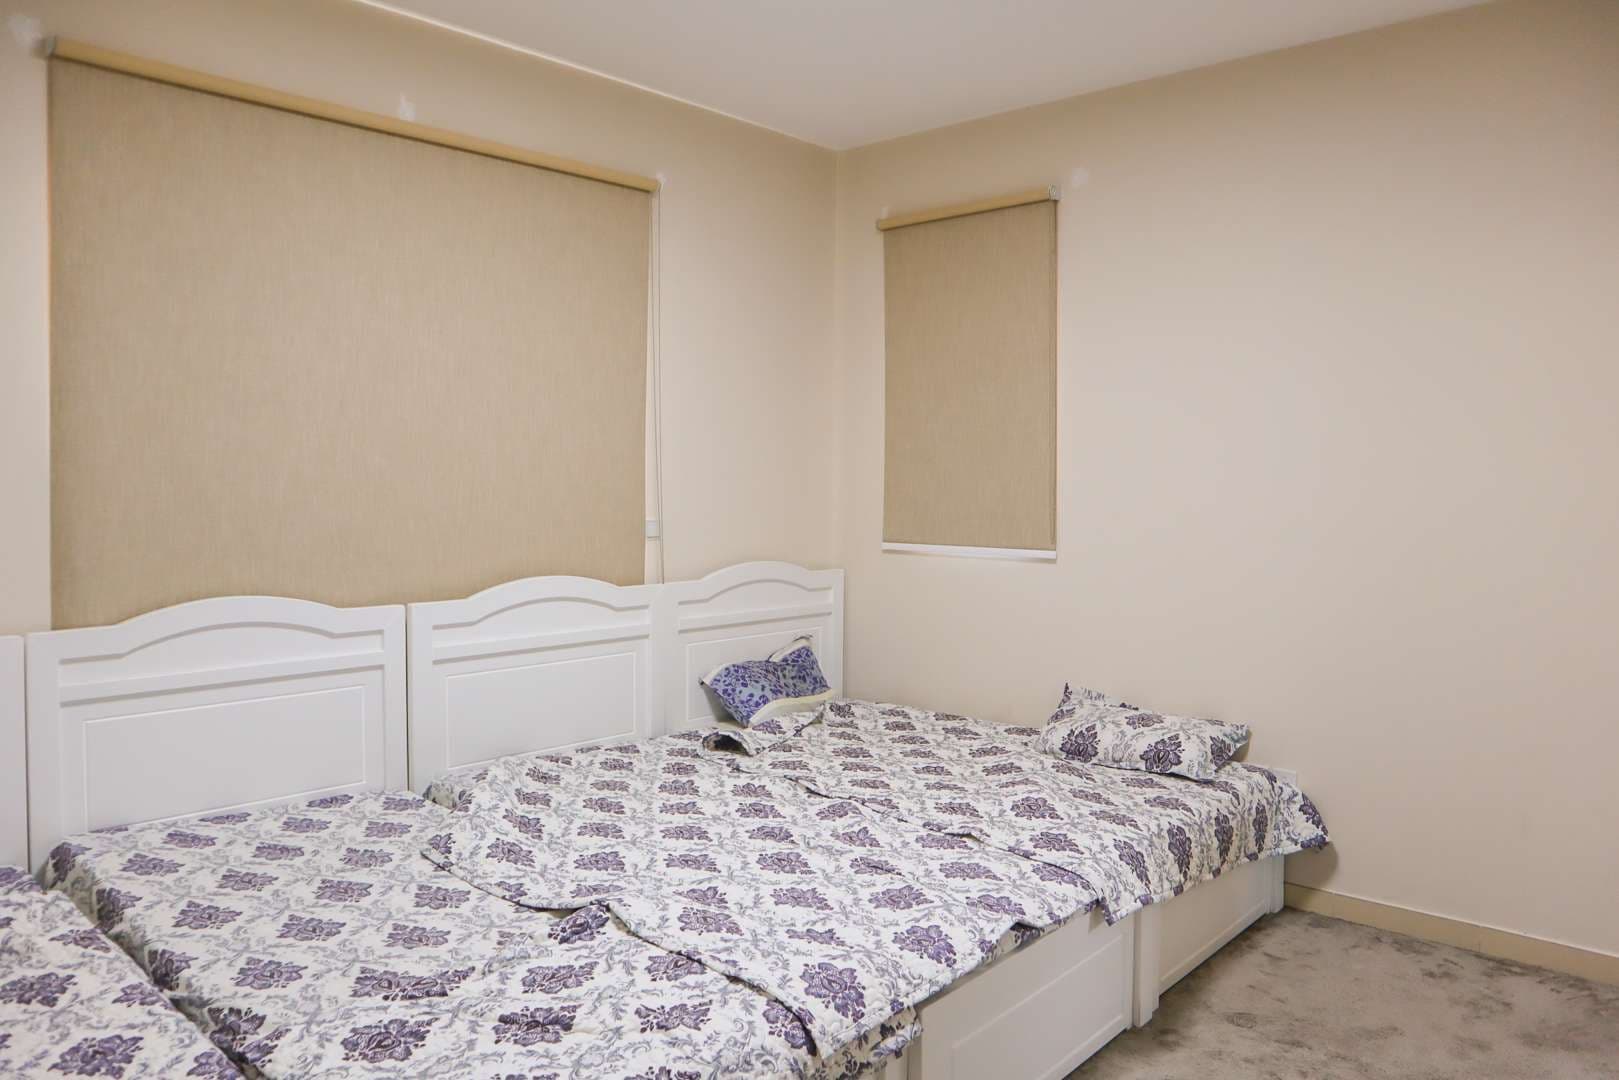 4 Bedroom Townhouse For Rent Mira Lp10896 2fa81415f972da00.jpg